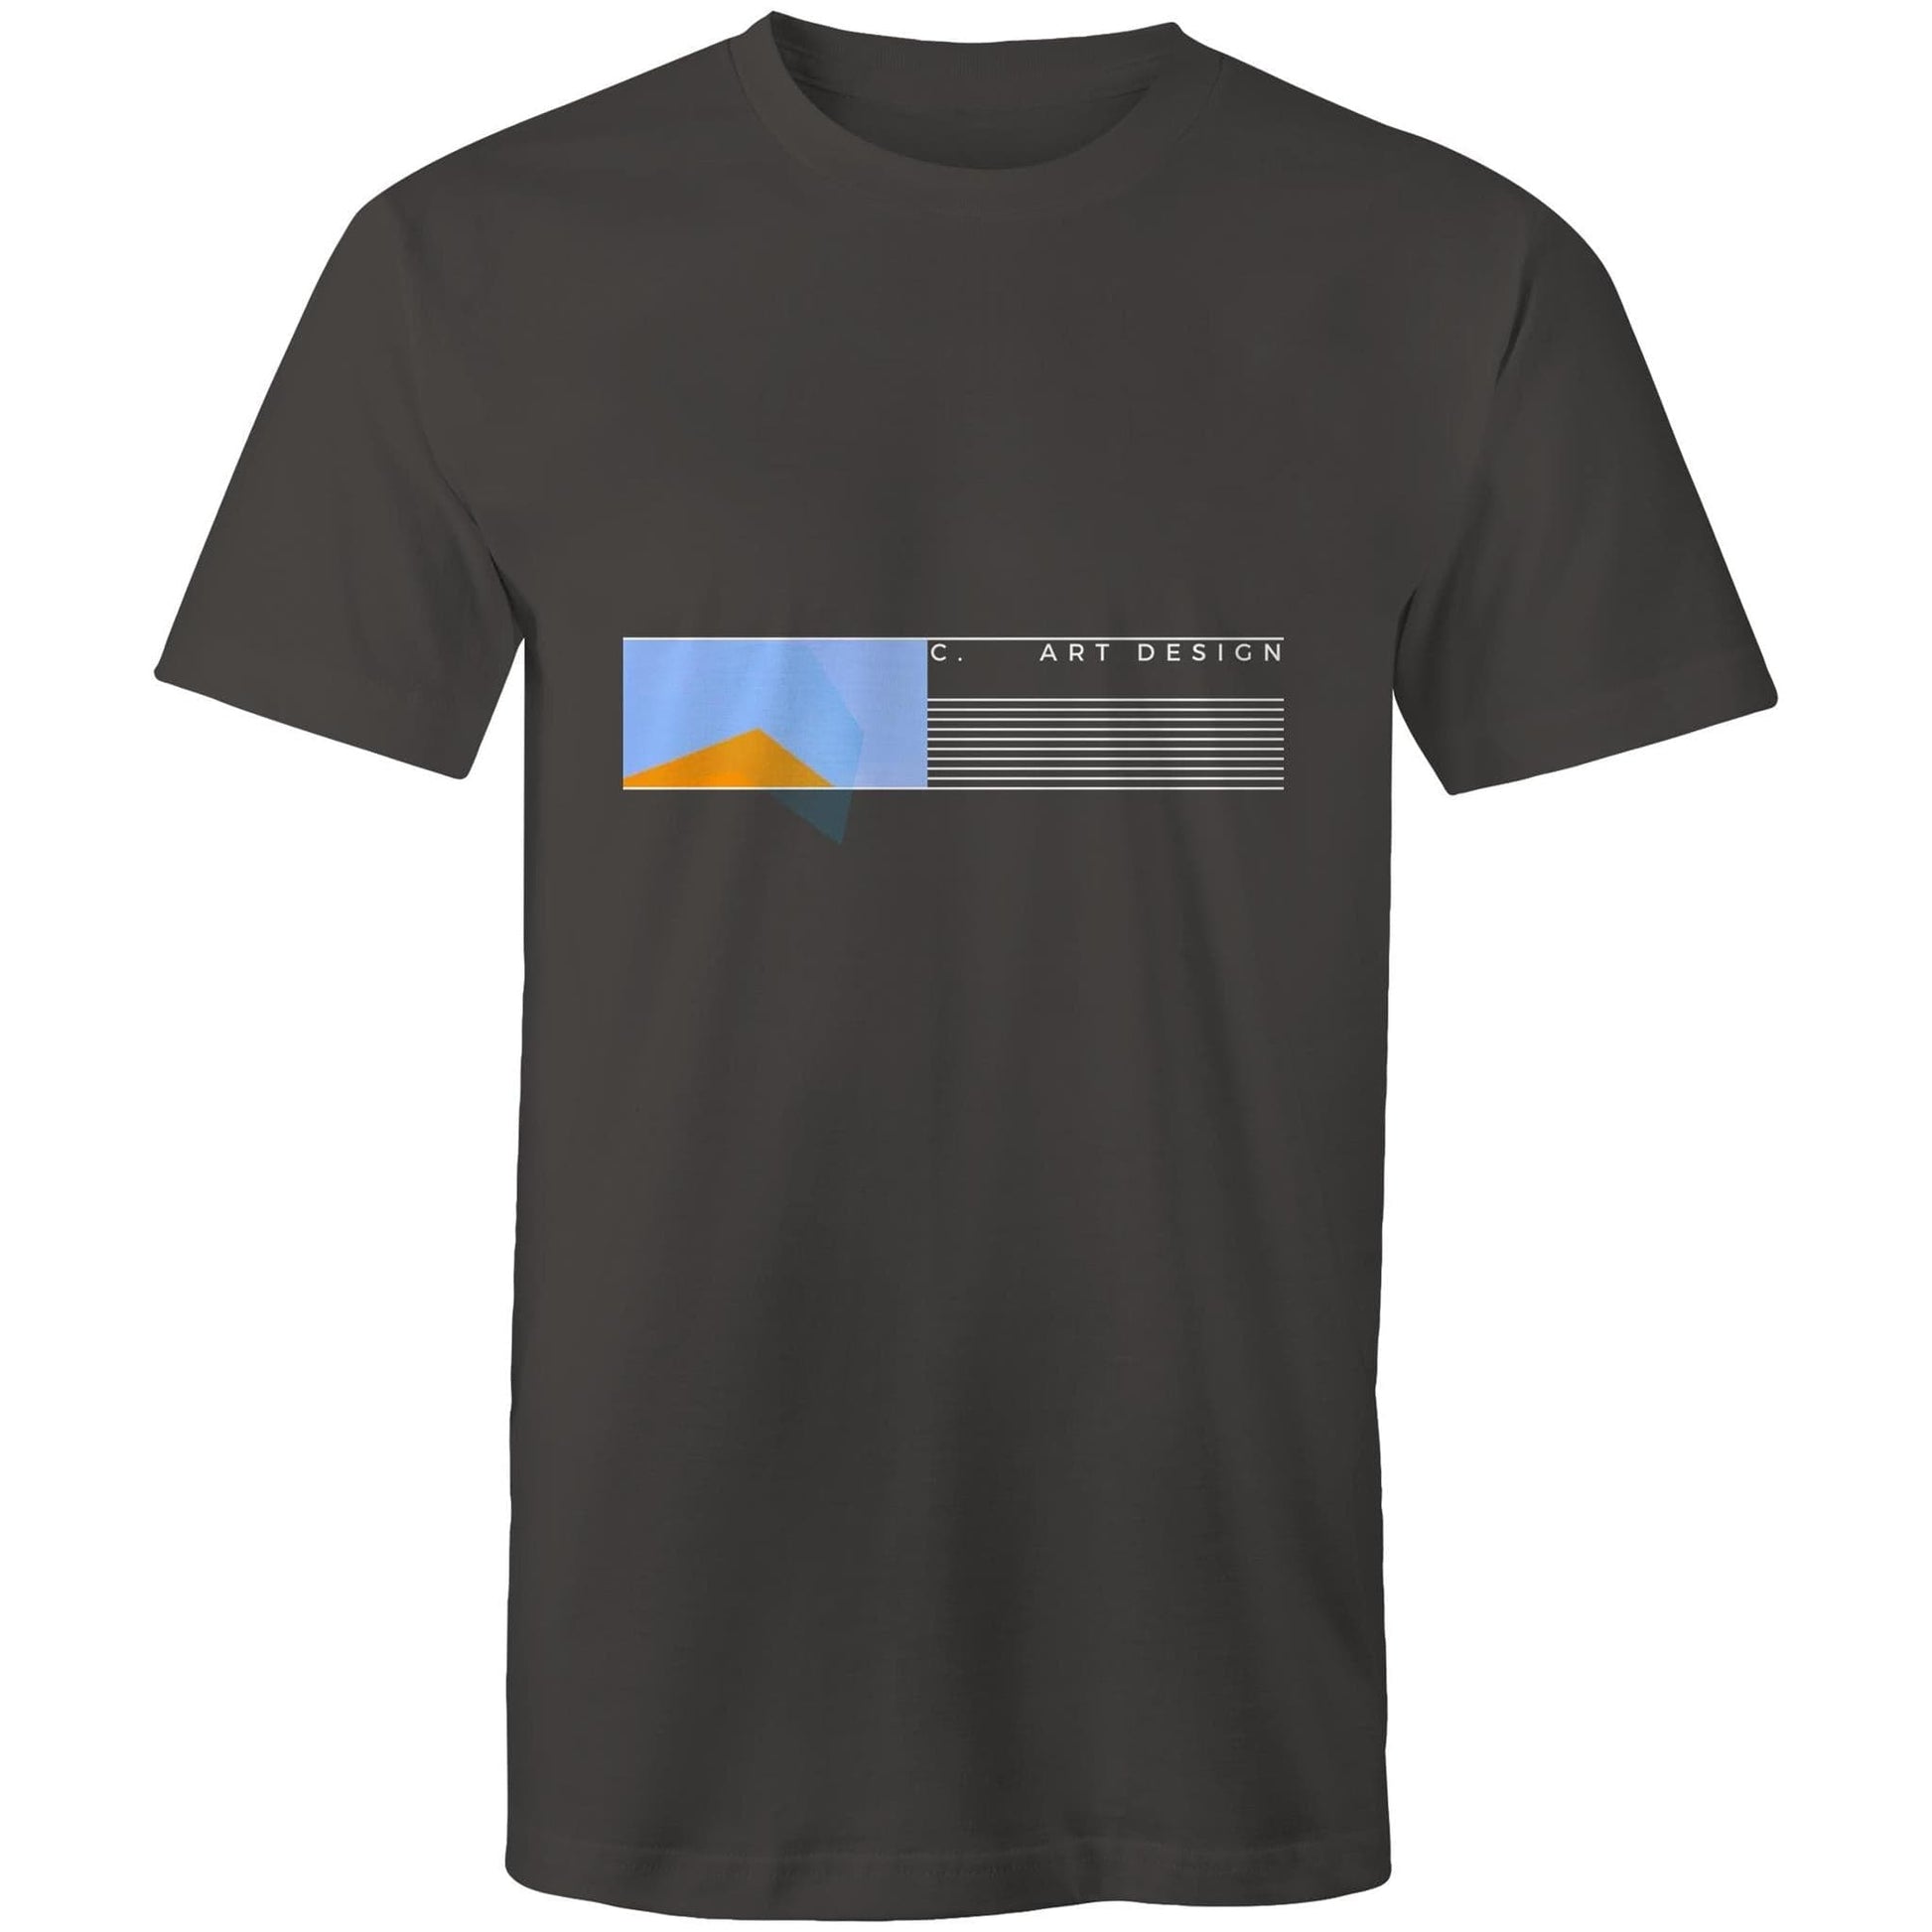 Charcoal / Small C. Art Design - Horizon Mens T-Shirt